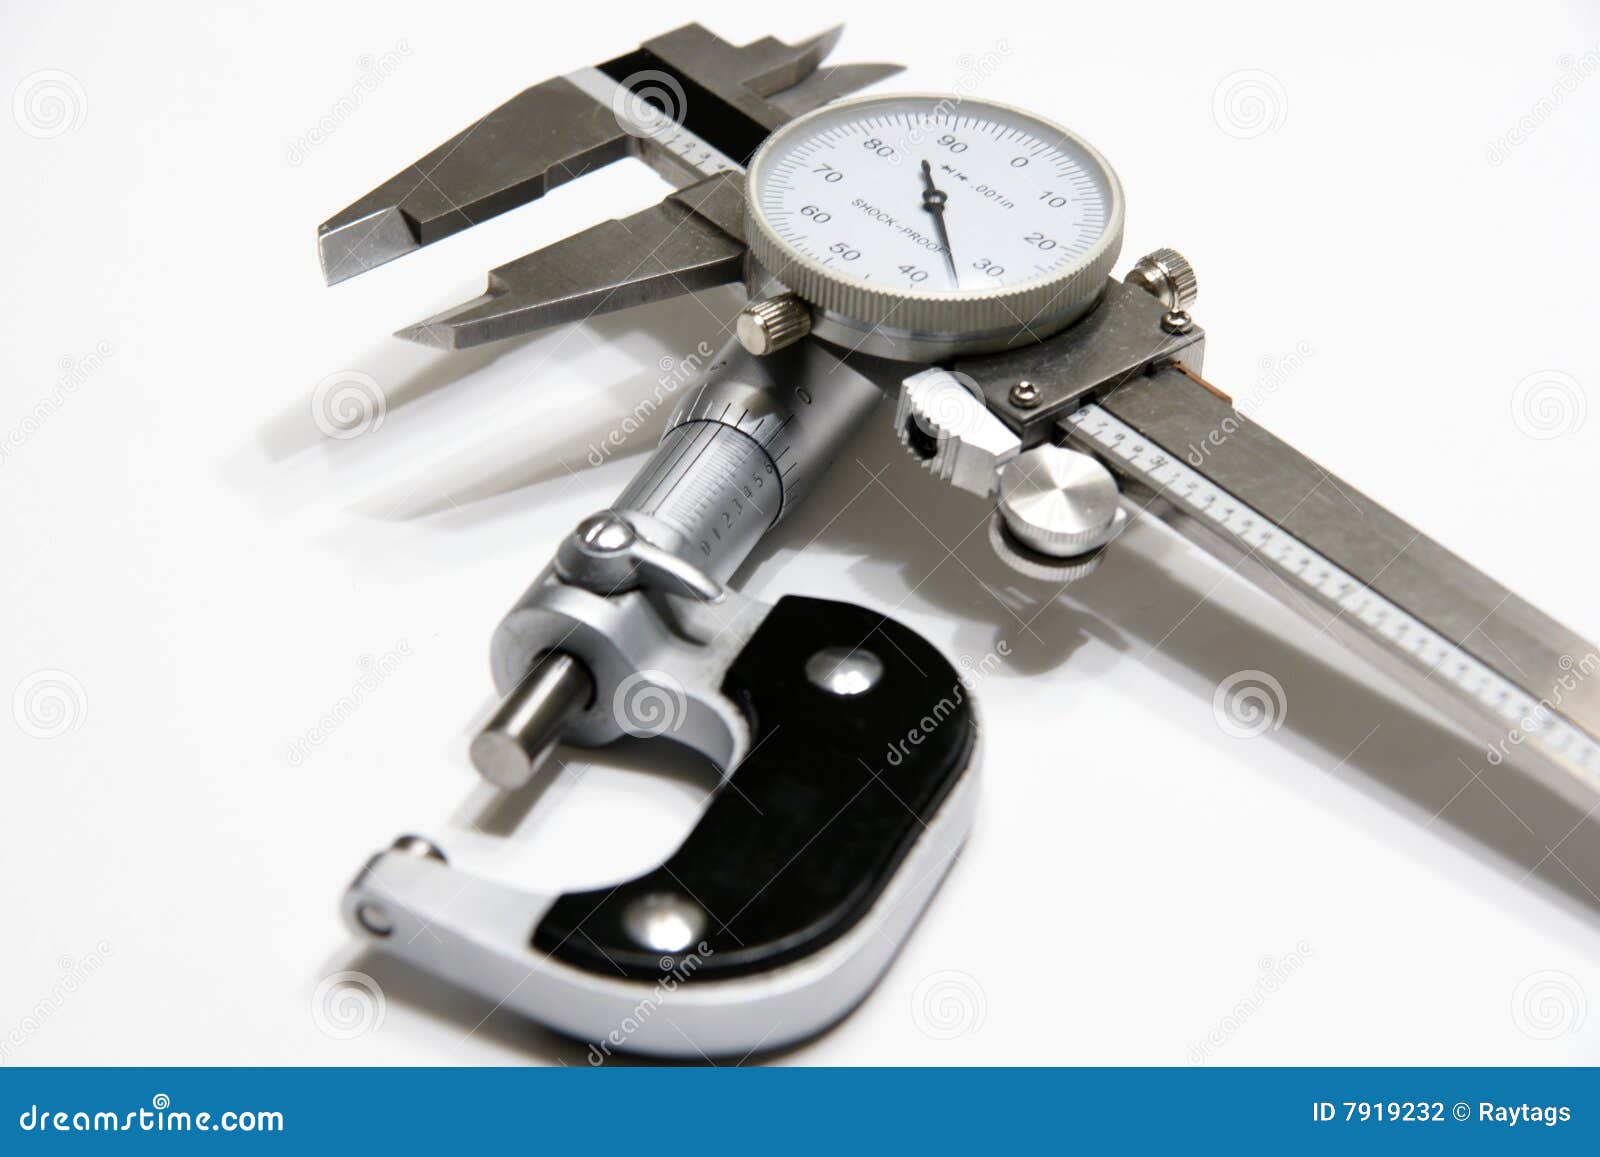 micrometer and caliper